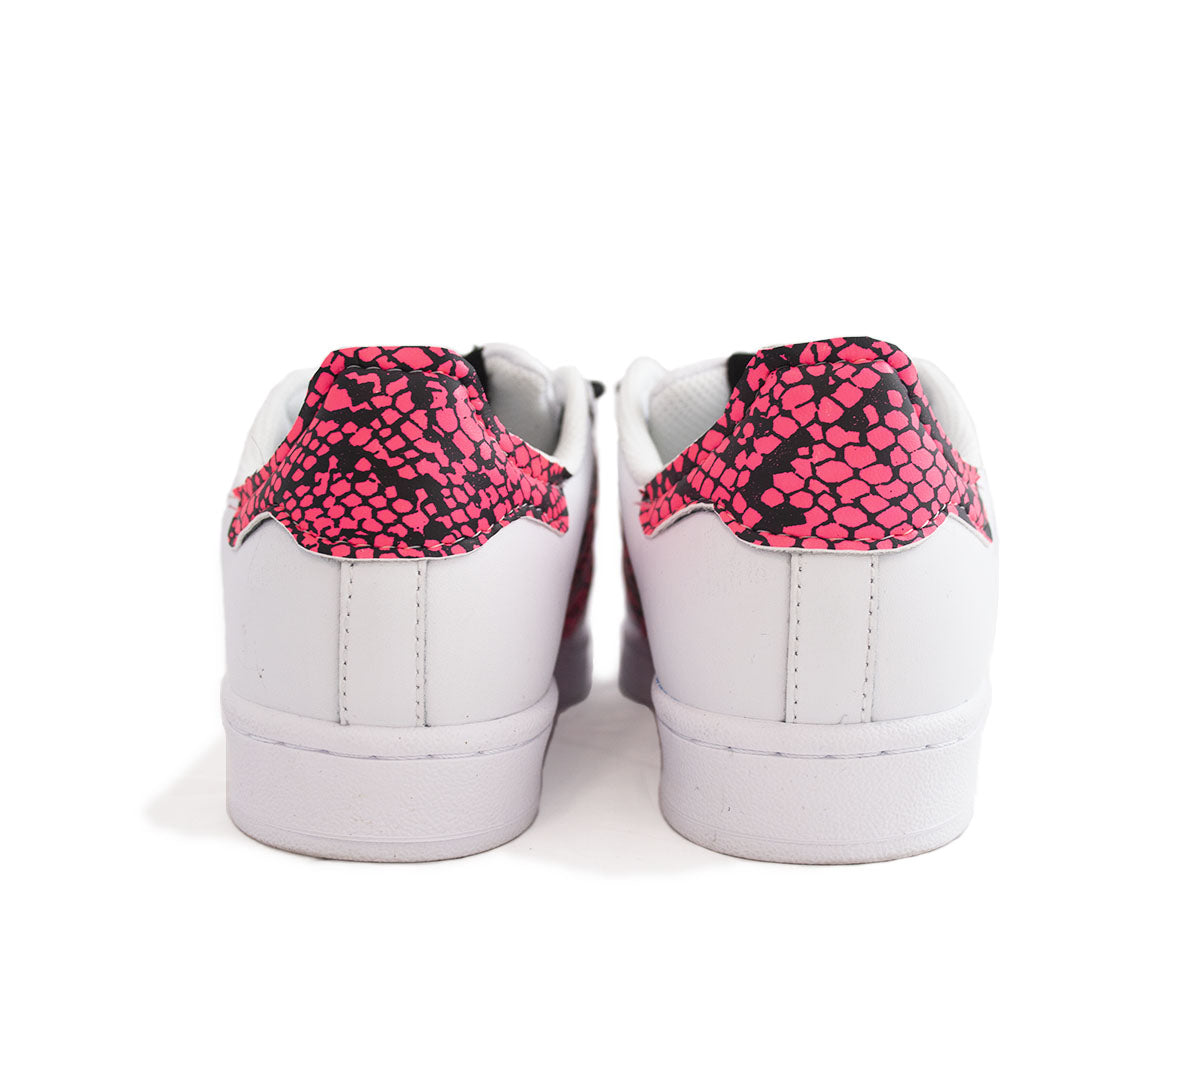 SEDDY'S Adidas Superstar "Fuck Love" Pink Pyton Customized